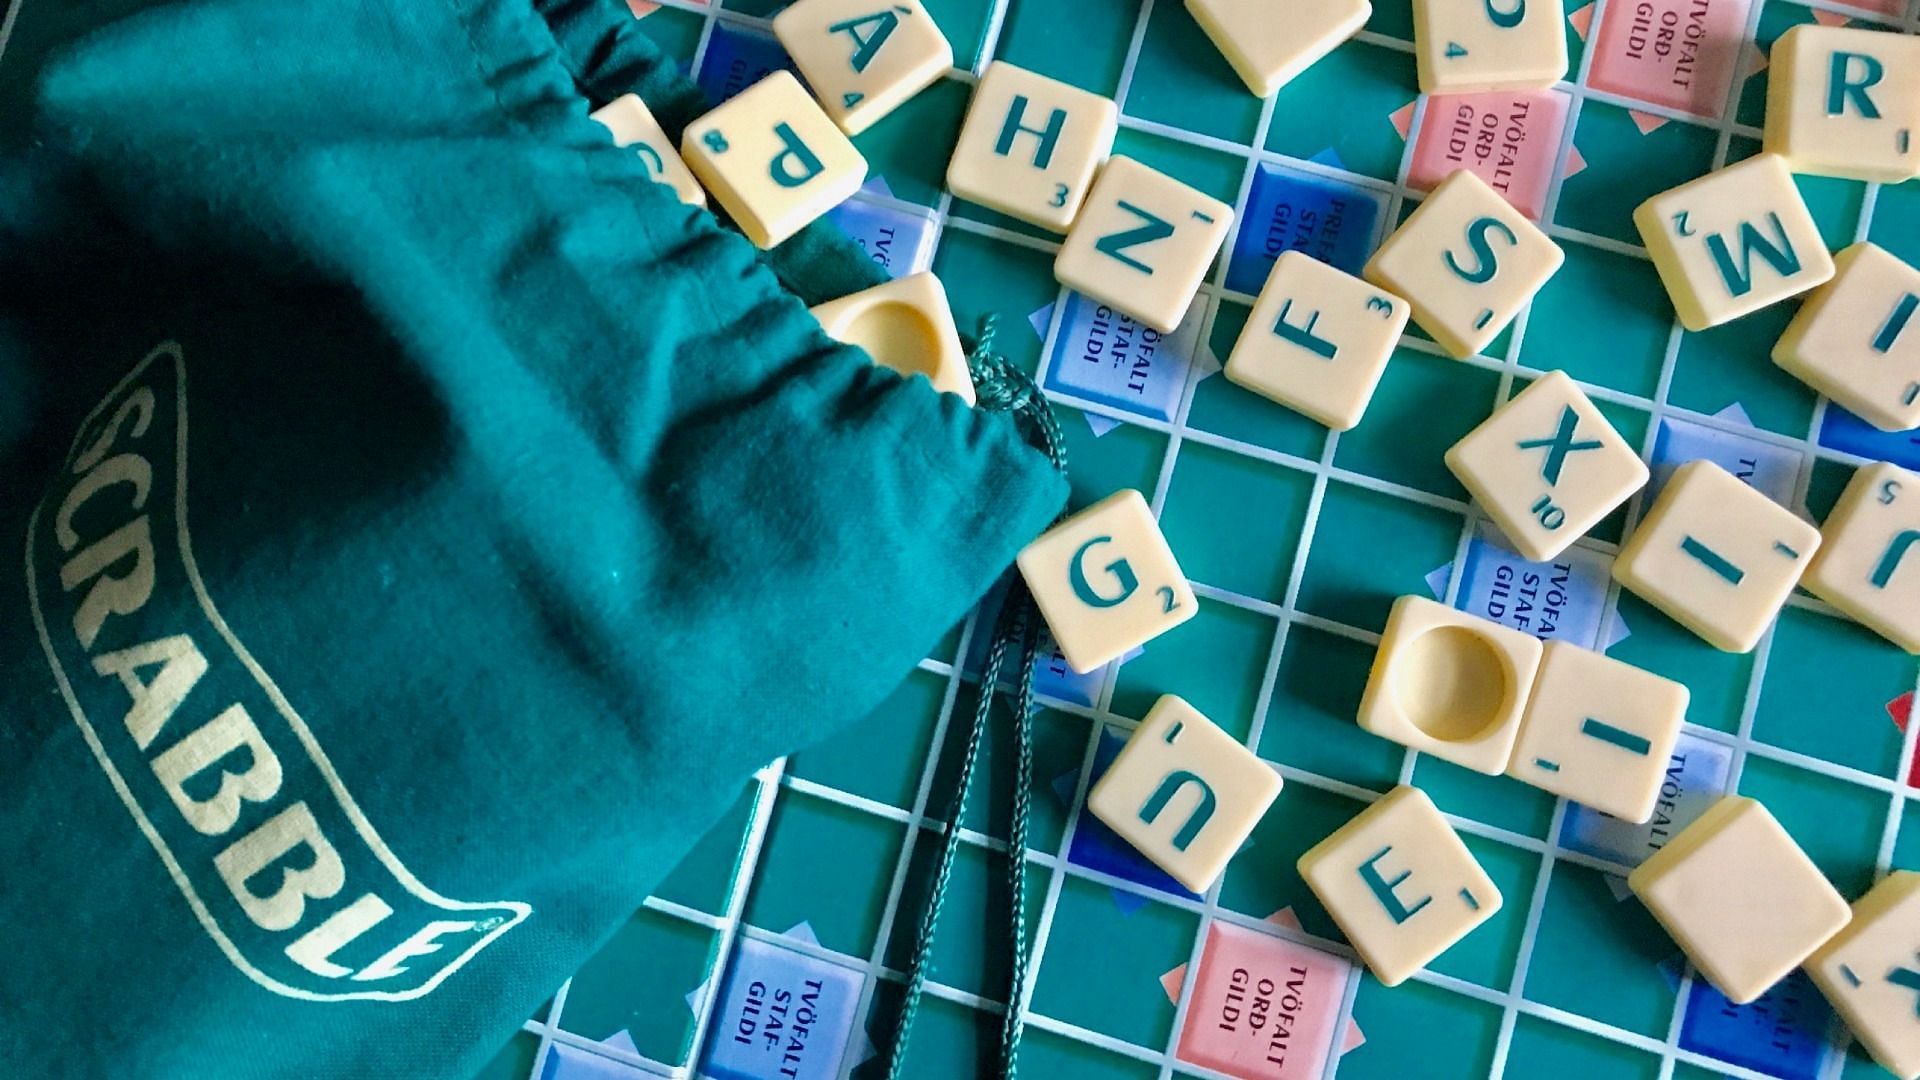 Scrabble word finder